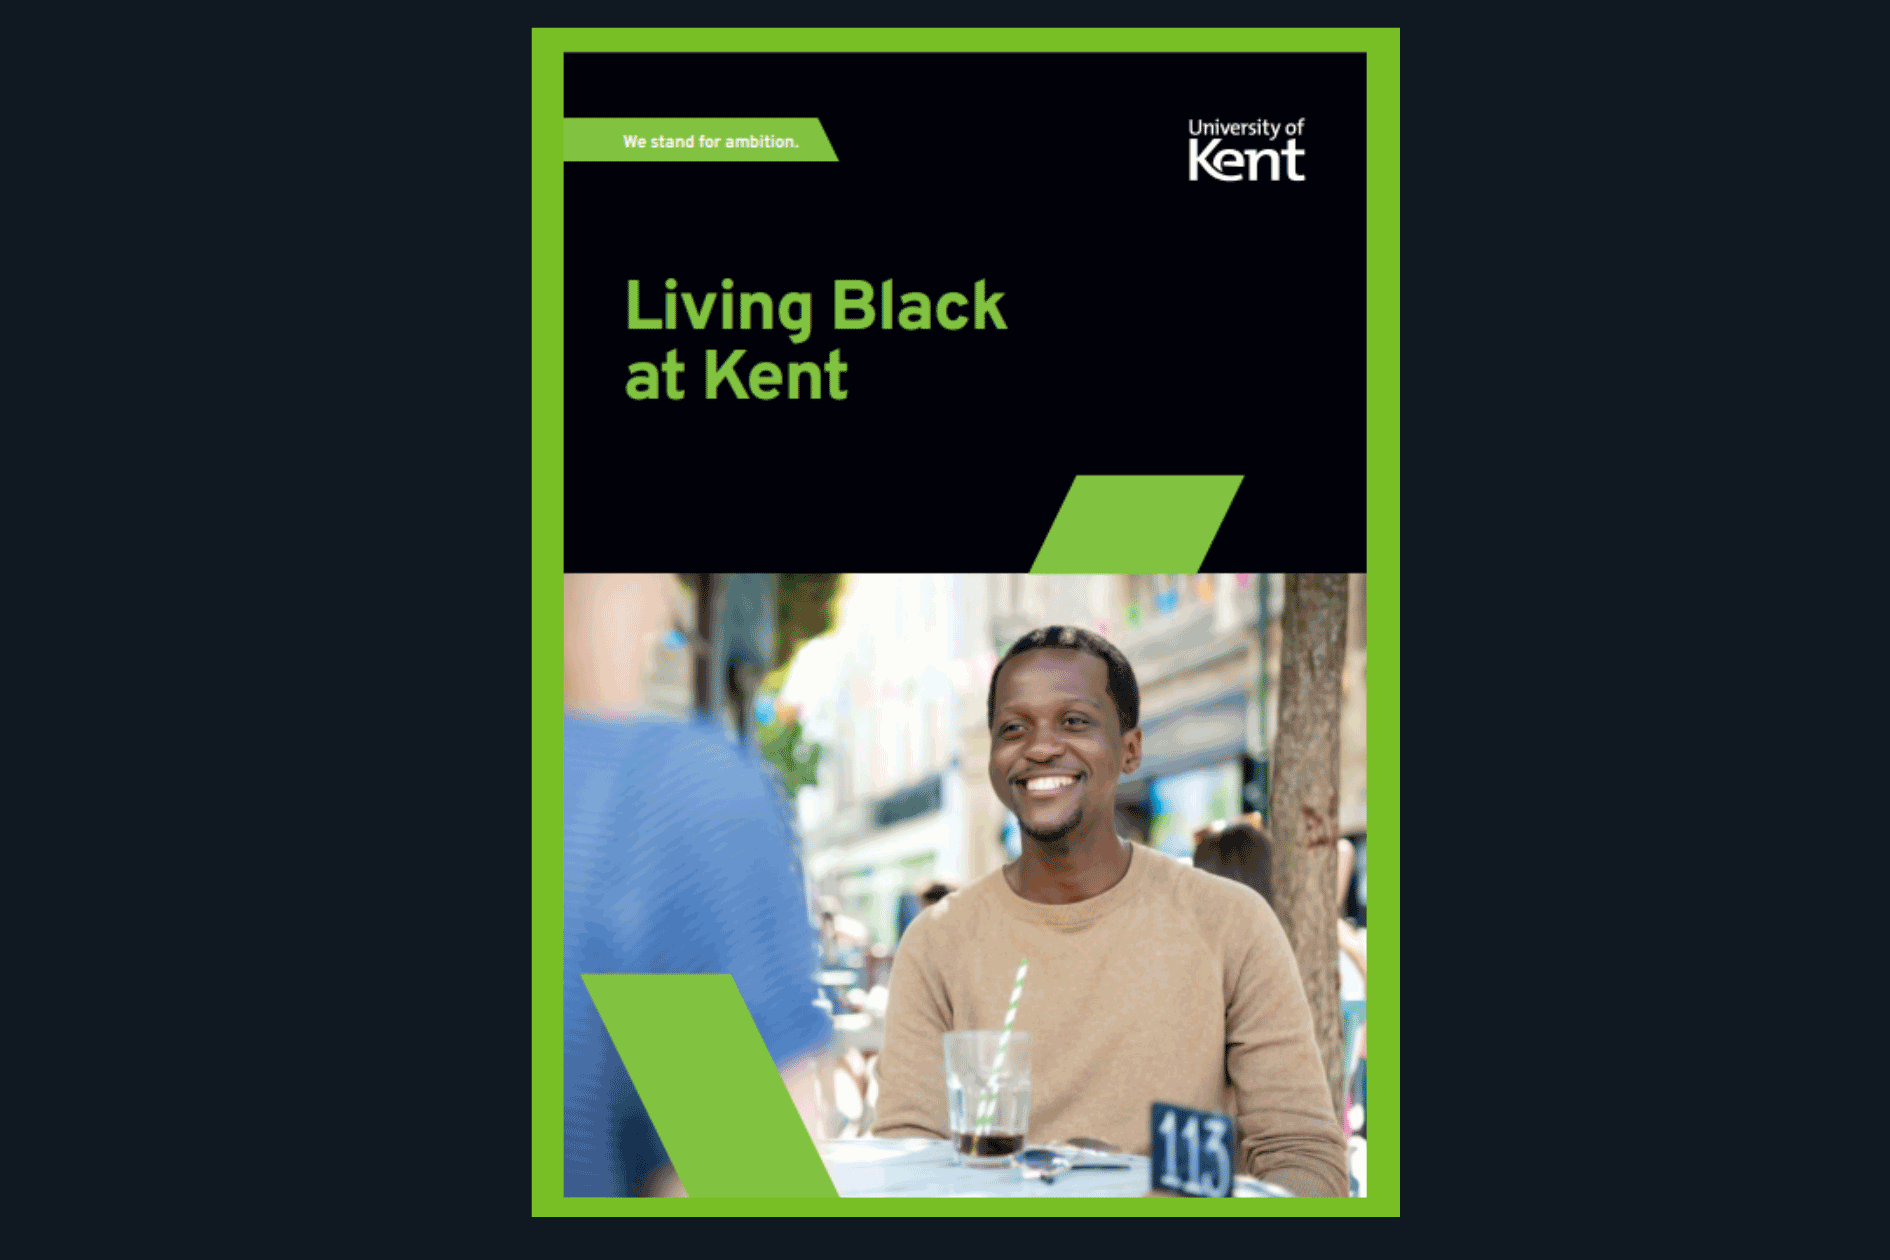 Living Black at Kent booklet front cover